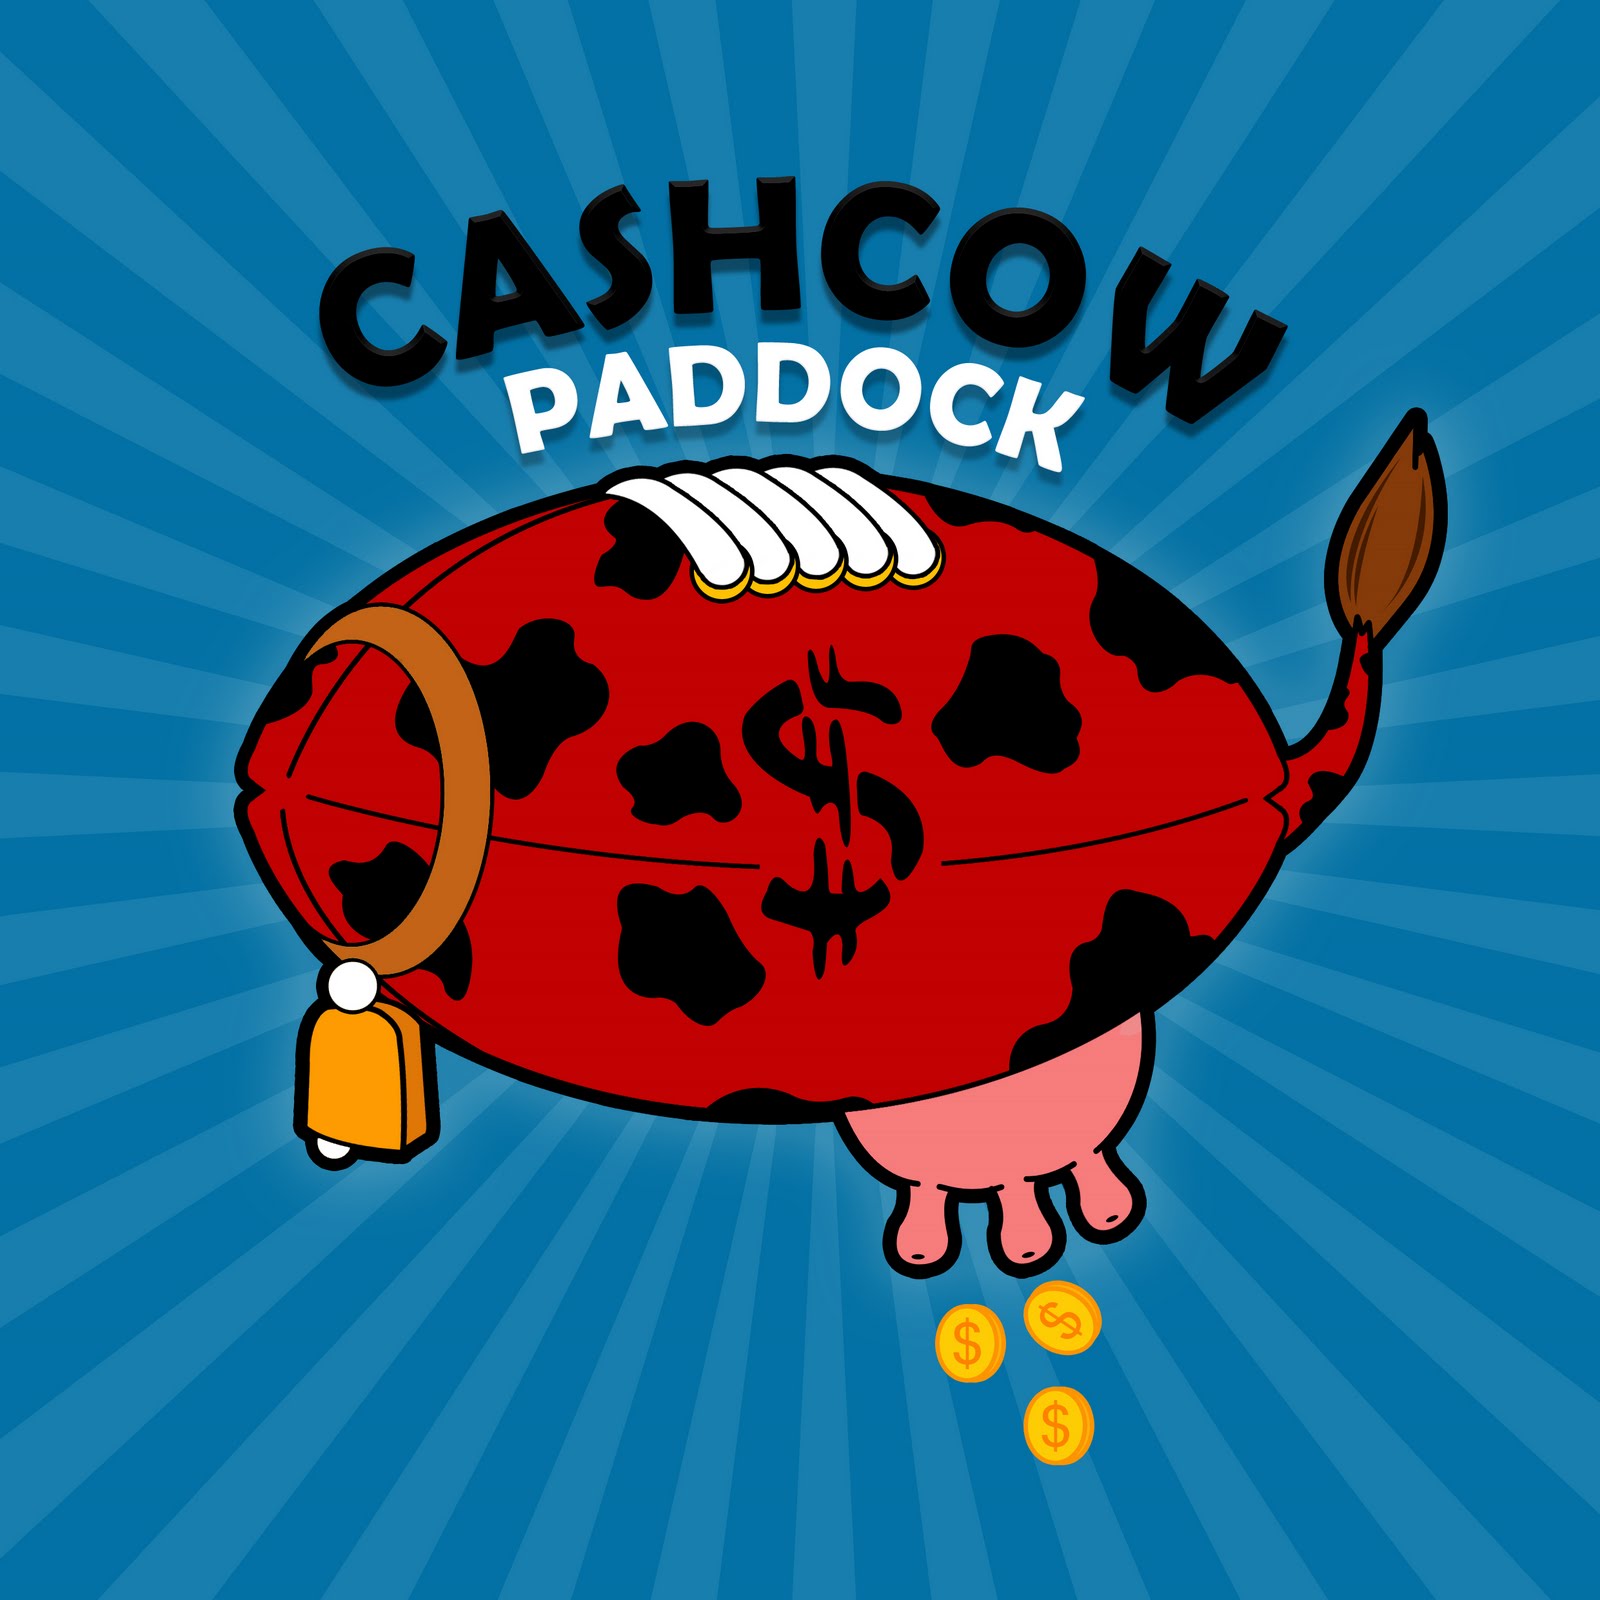 Cashcow Paddock